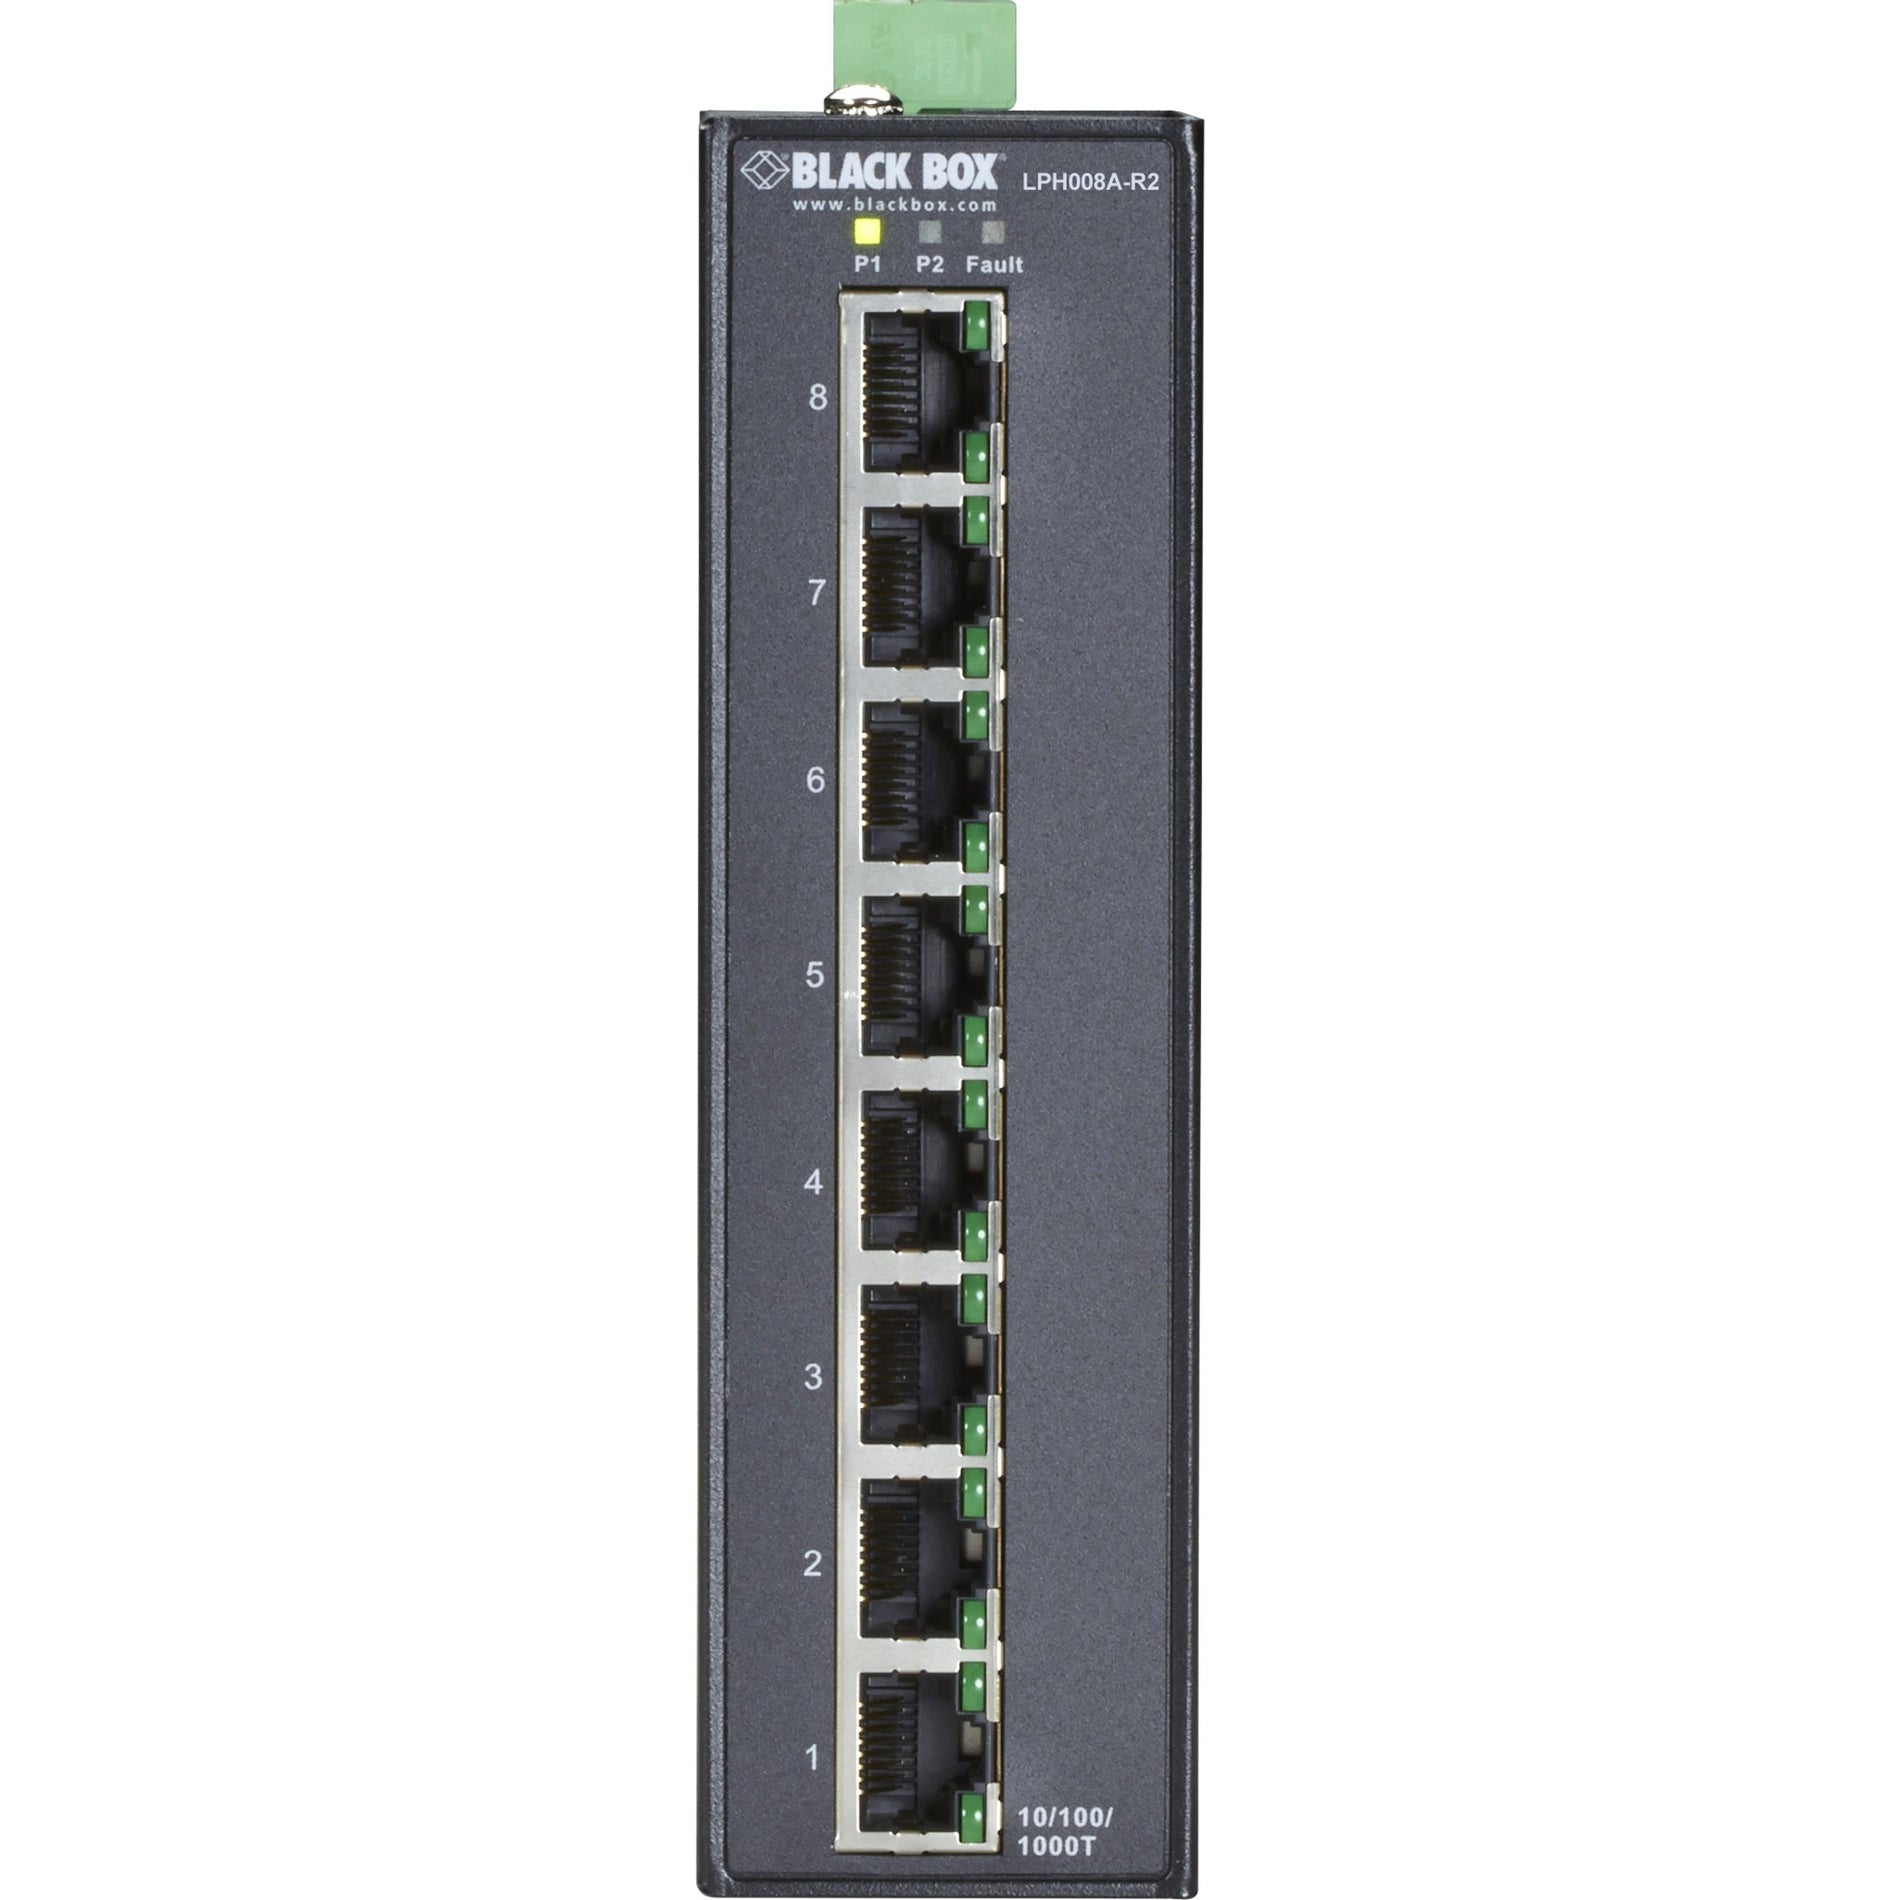 Black Box LPH008A-R2 Industrial Unmanaged Gigabit PoE+ Switch - 8-Port, TAA Compliant, 5 Year Warranty